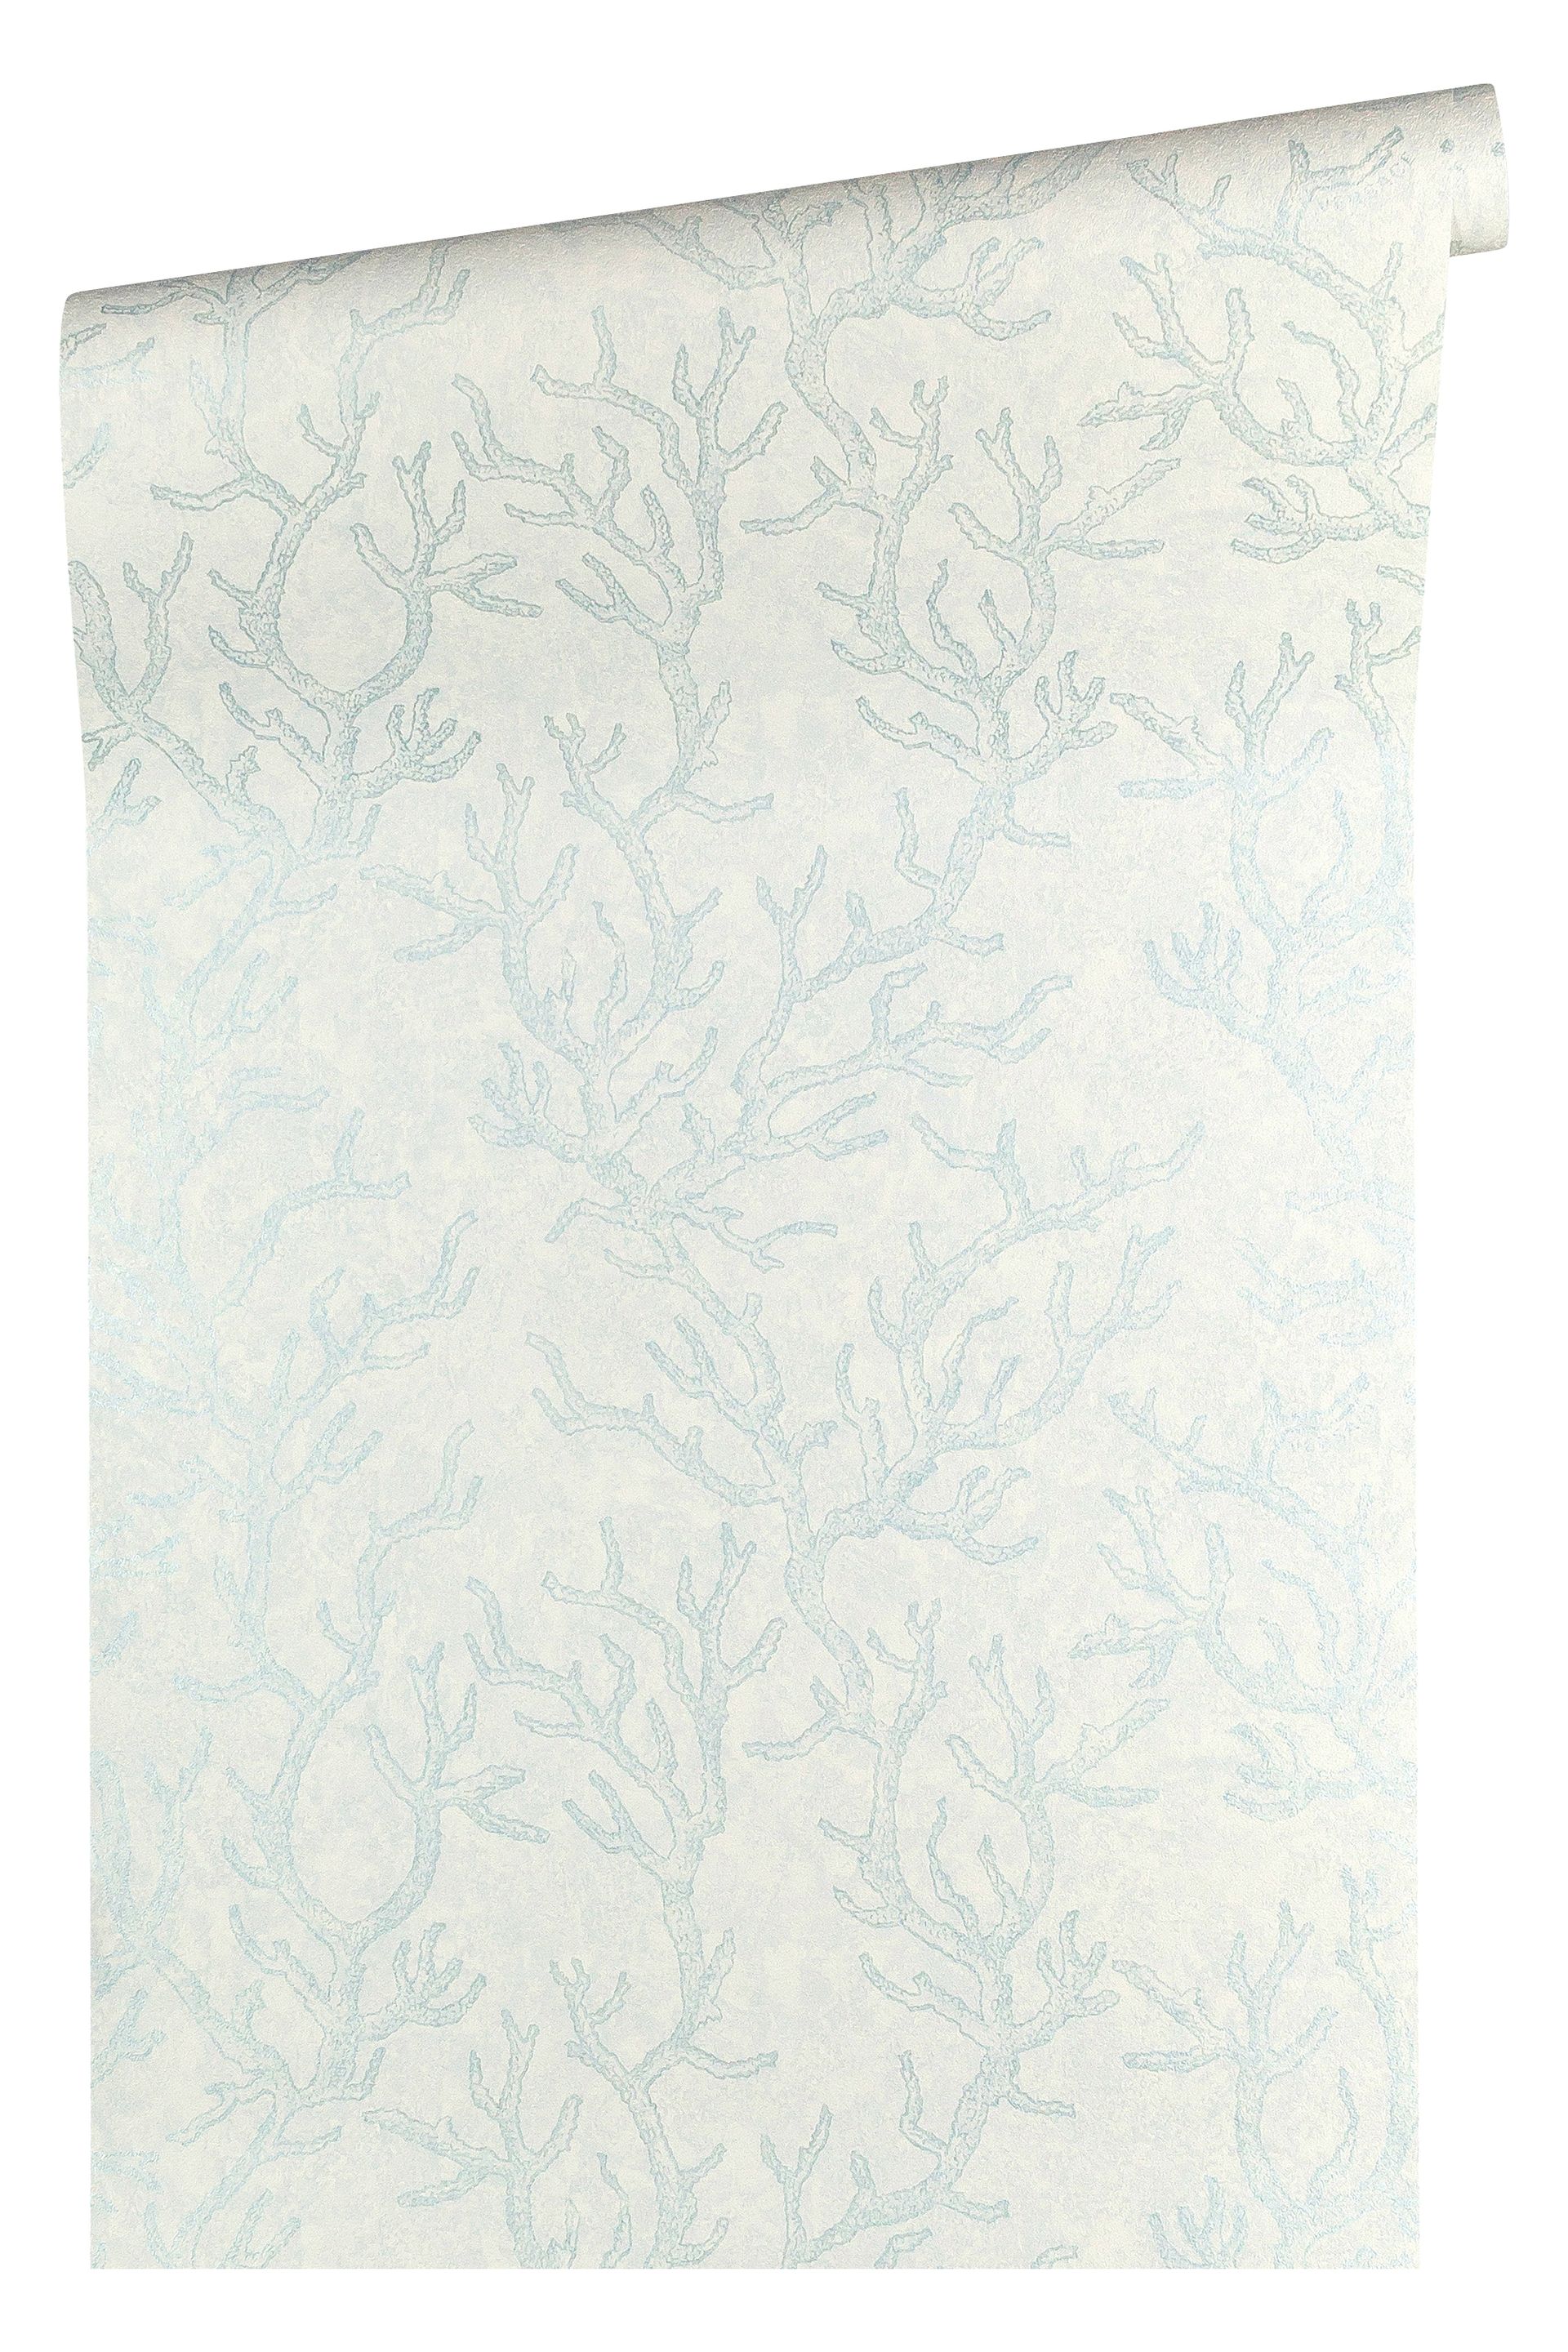 Versace wallpaper Versace 3, Design Tapete, silber, blau 344972